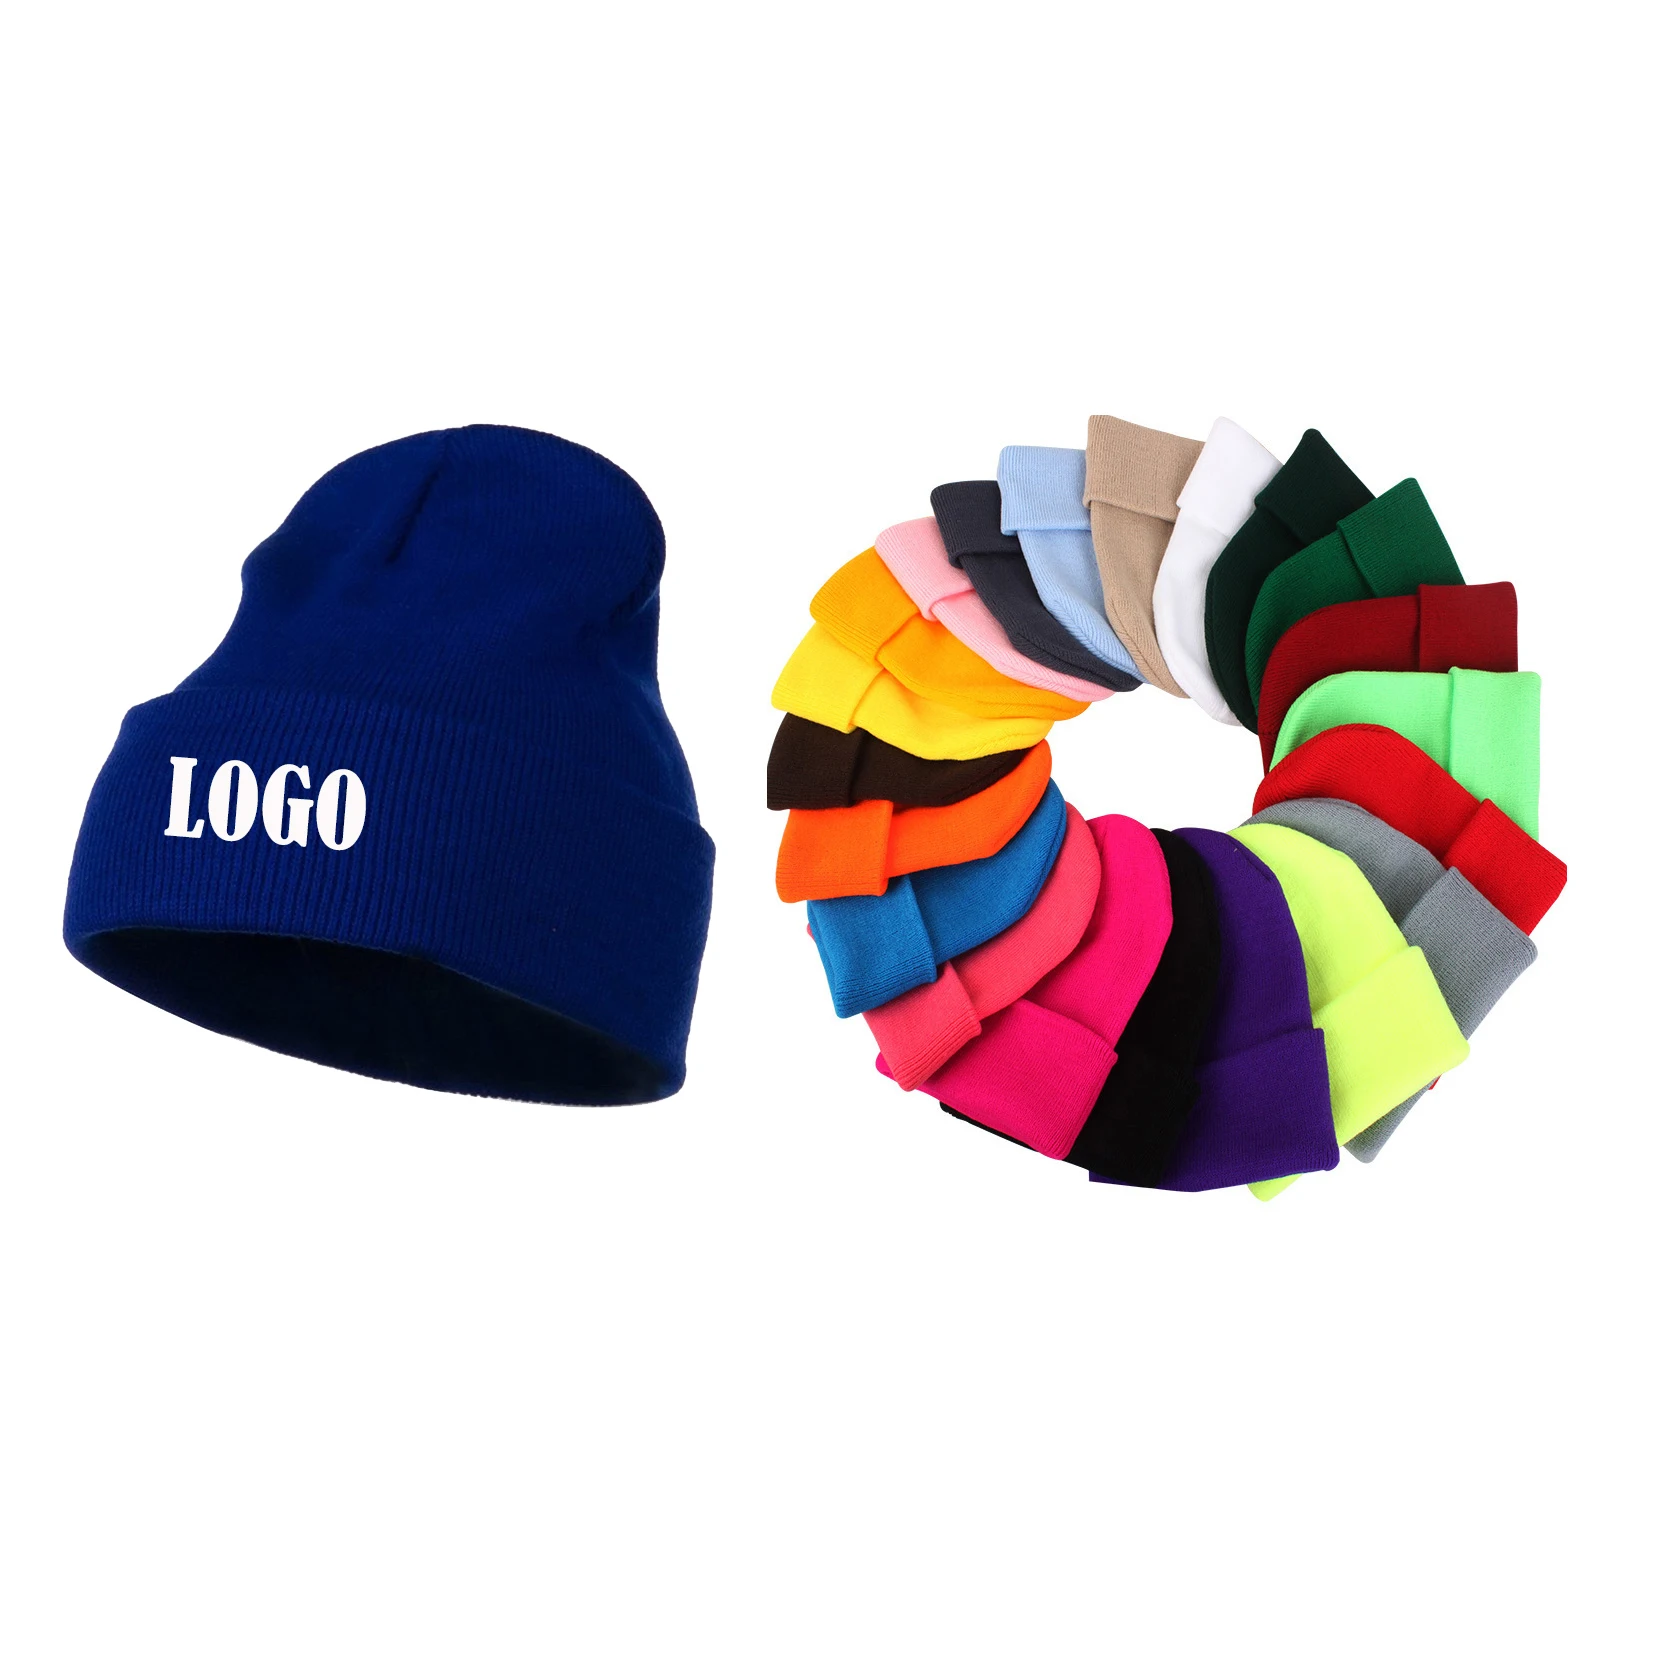 
High Quality Colorful Unisex NY Beanie hat Custom Knit Beanie  (62356862895)